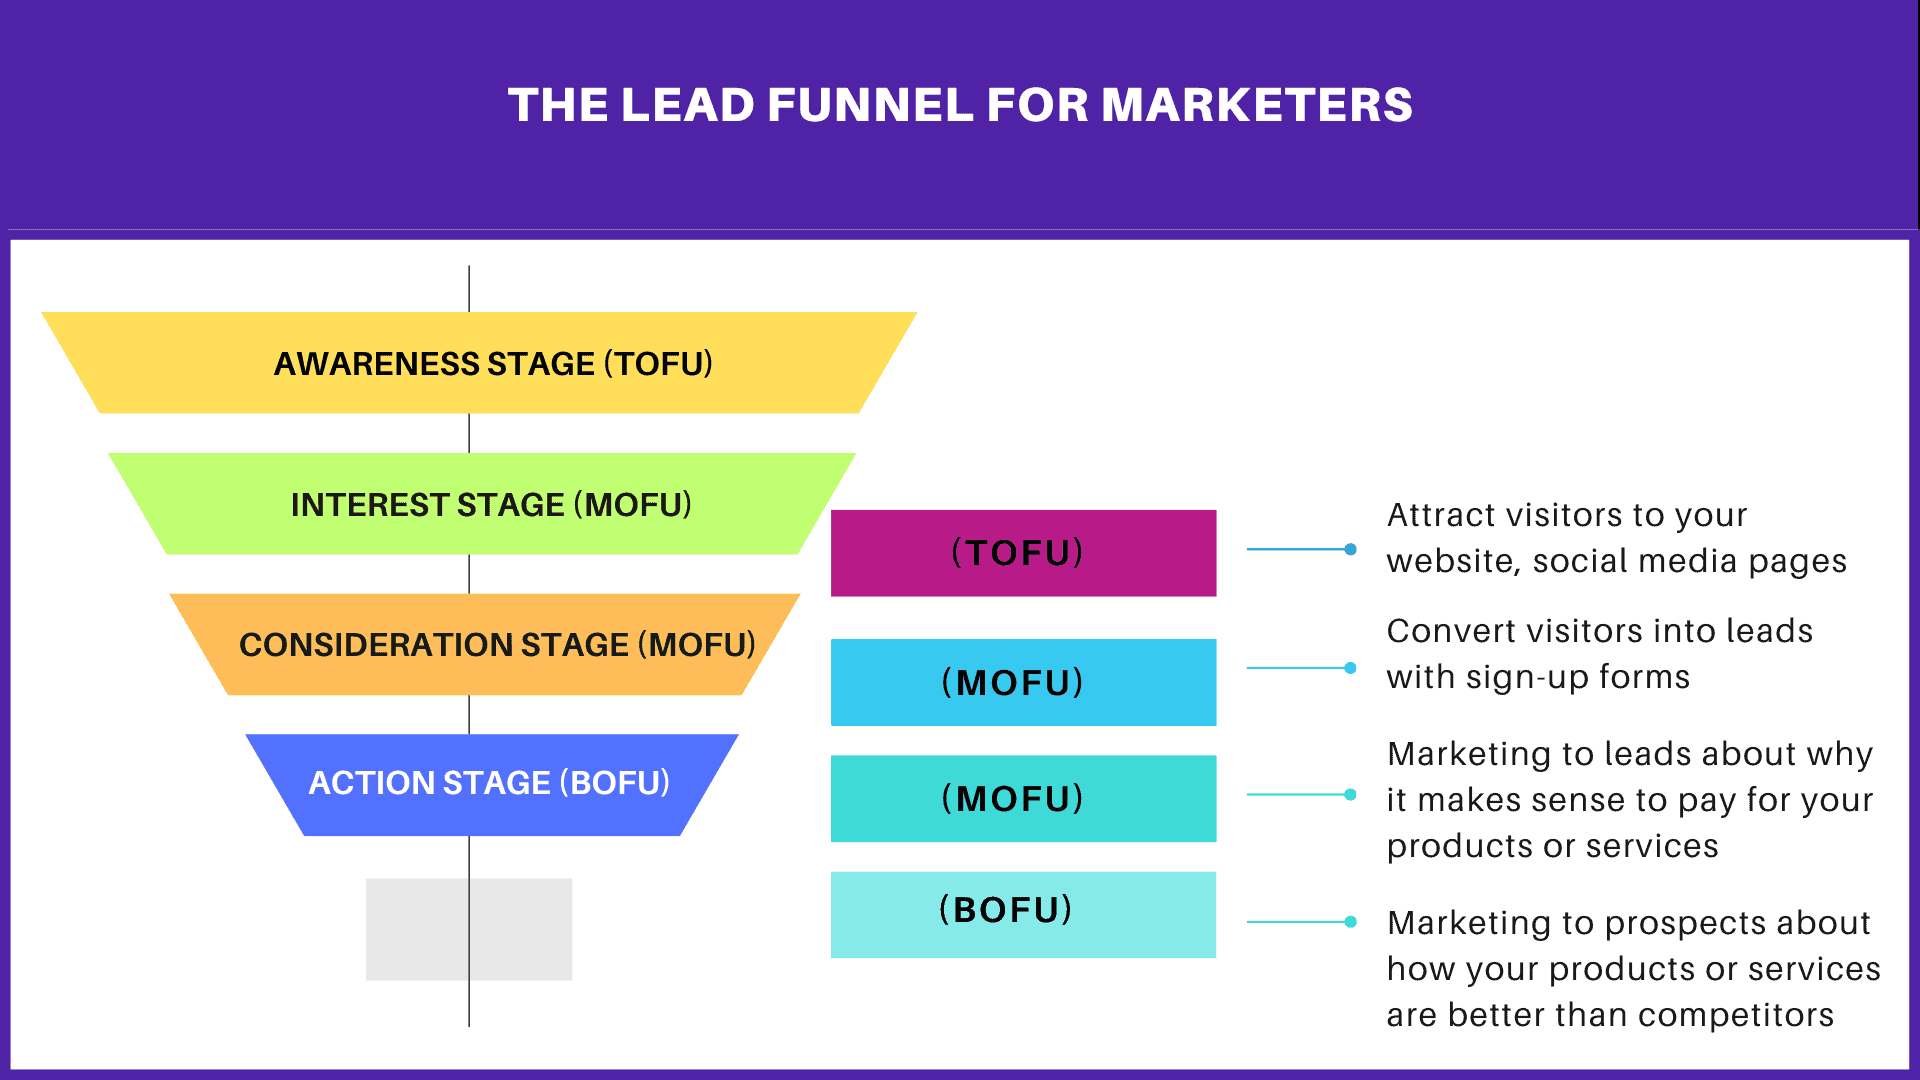 lead funnel visual representation by EngageBay